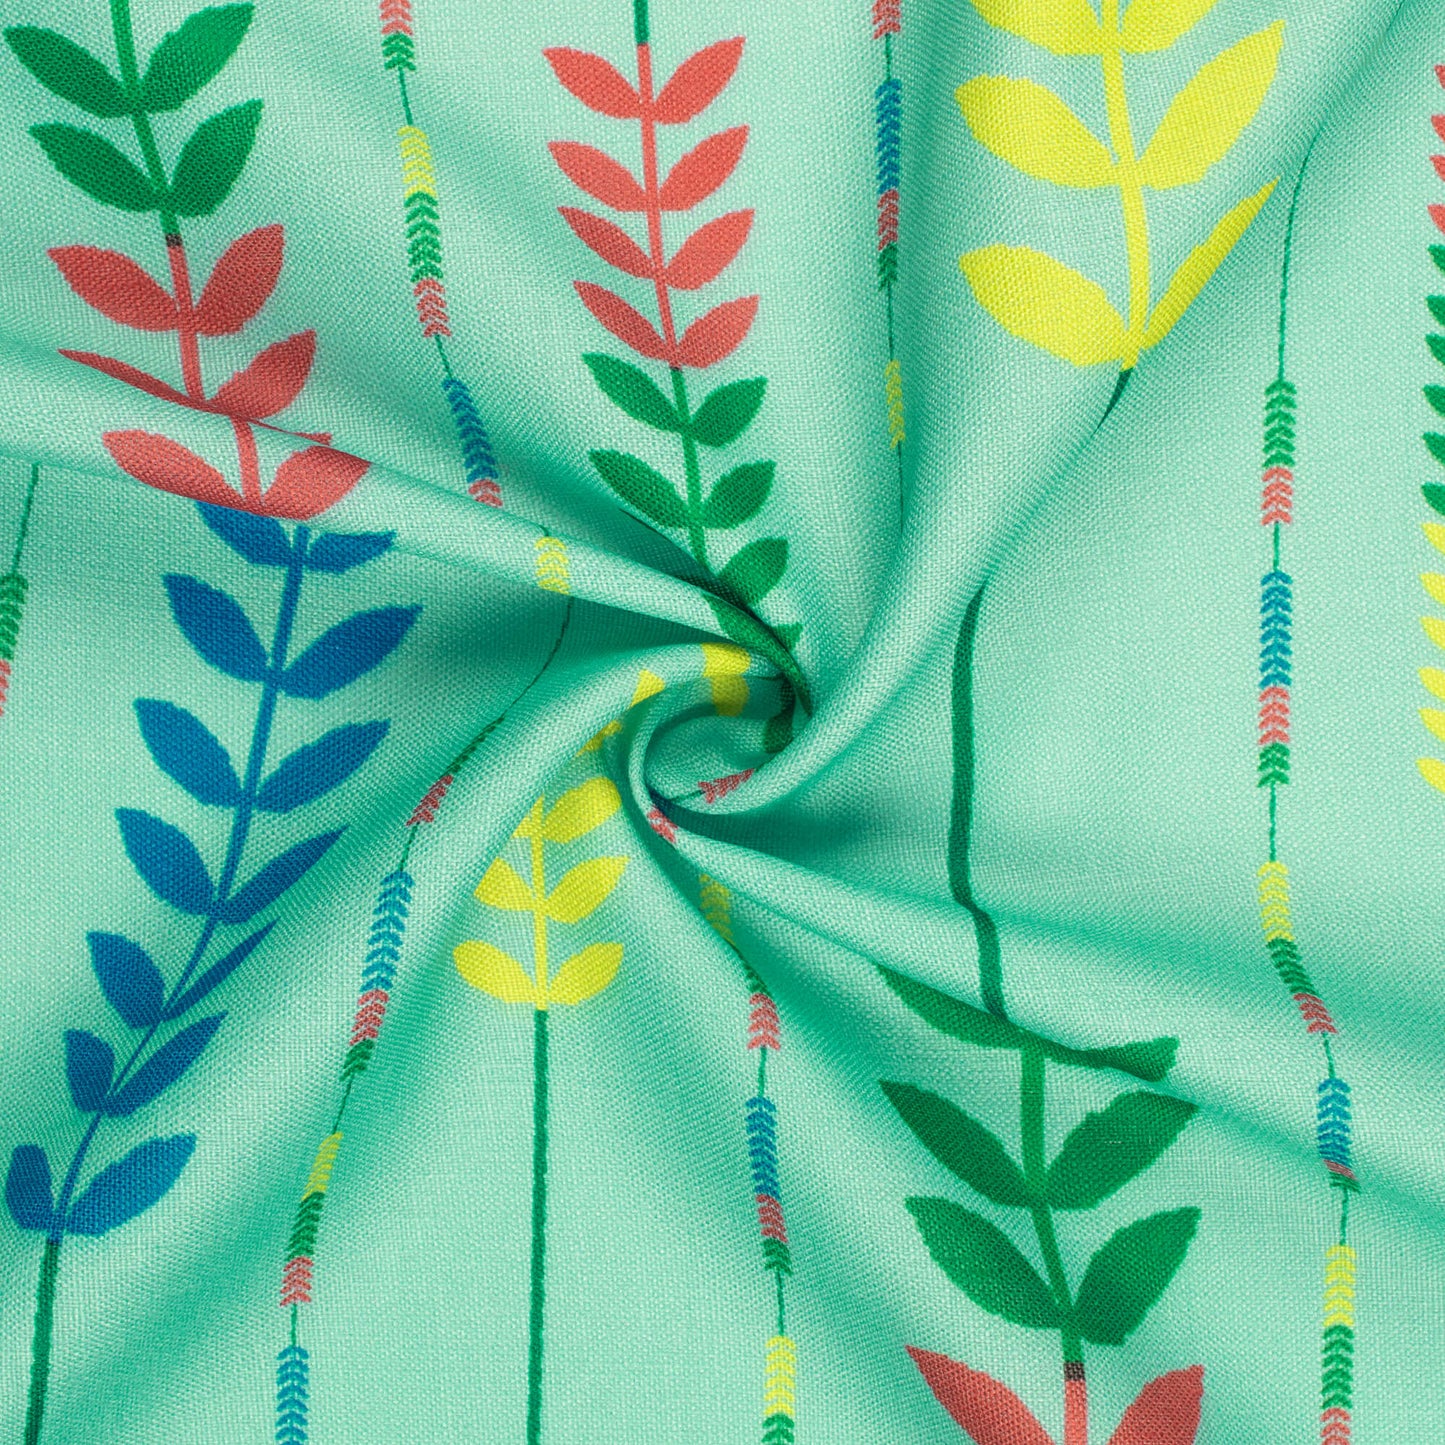 Paris Green And Yellow Leaf Pattern Digital Print Poly Linen Slub Fabric